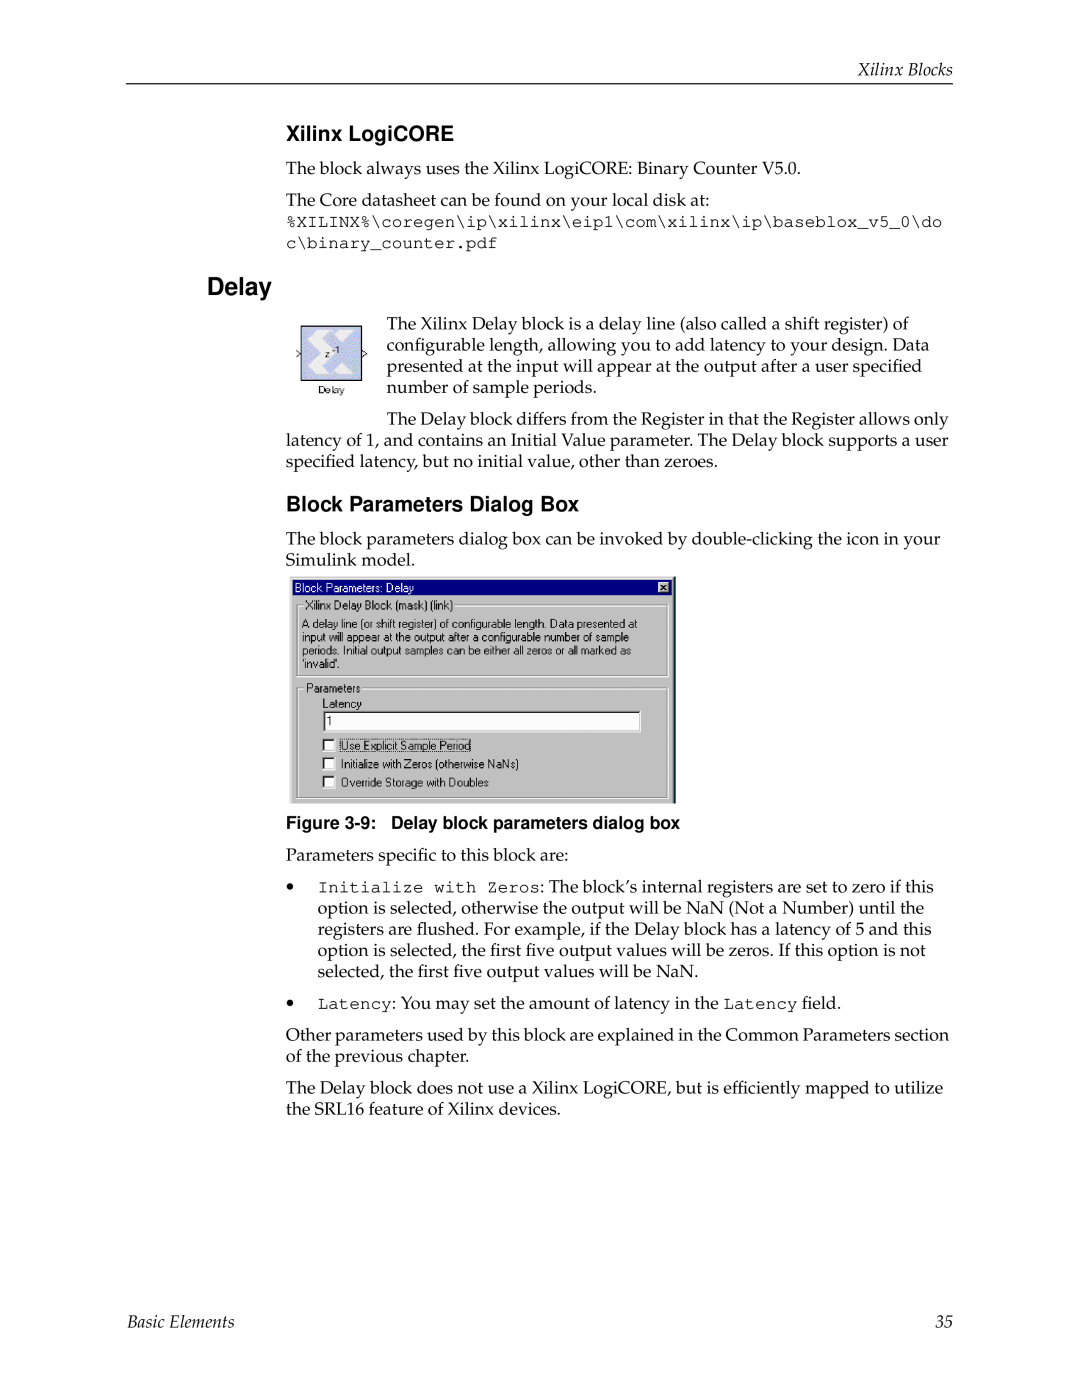 Xilinx V2.1 manual Delay, Xilinx LogiCORE, Block Parameters Dialog Box, Xilinx Blocks, Basic Elements 